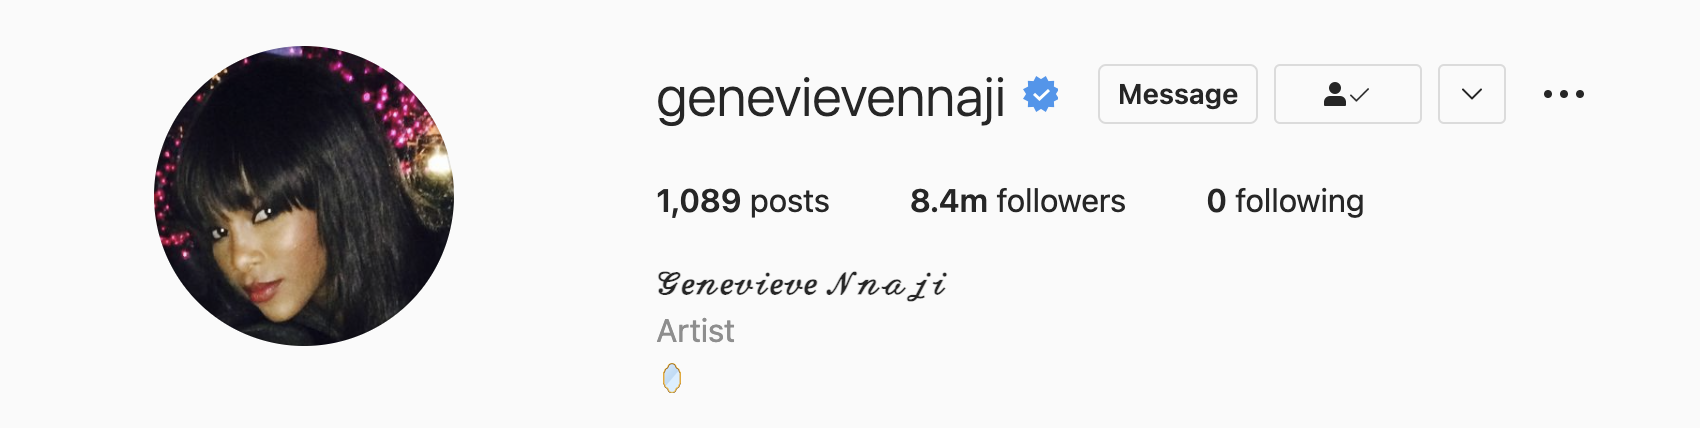 Genevieve Nnaji Unfollows Everyone On Instagram